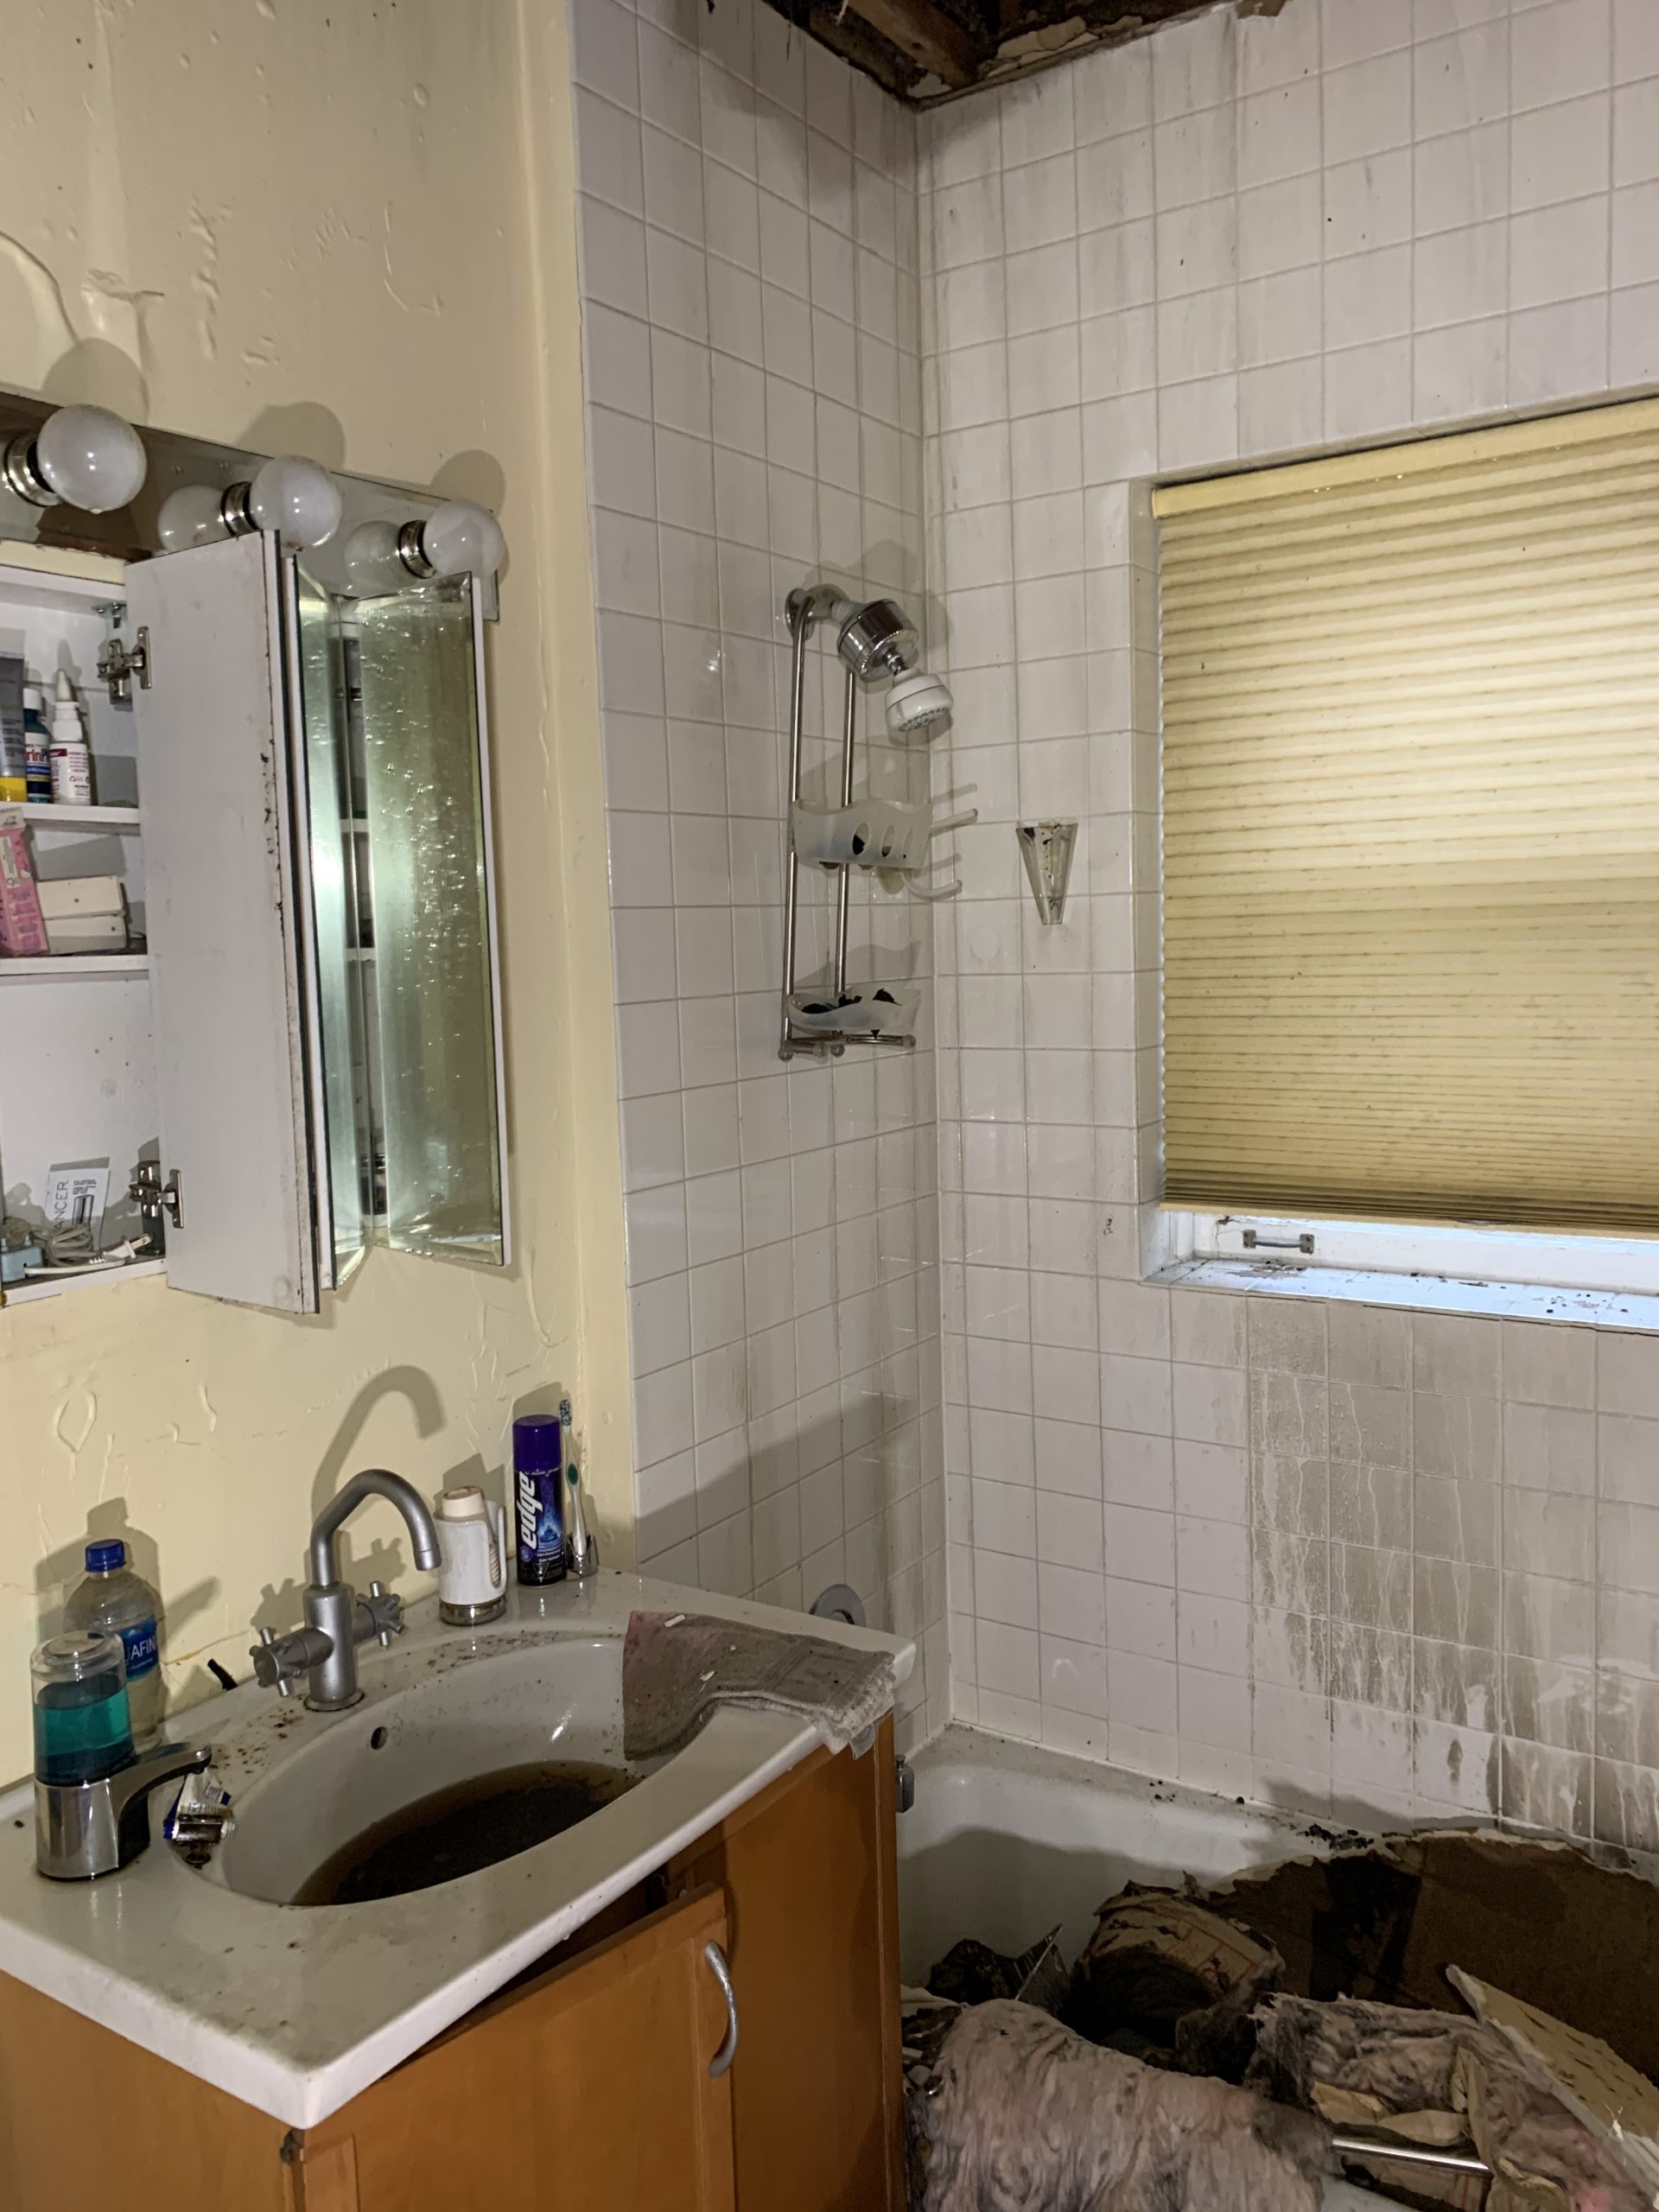 Bathroom in need of a Water Damage Claim in Evanston, Skokie, Glenview, Deerfield, Northbrook, and Nearby Cities